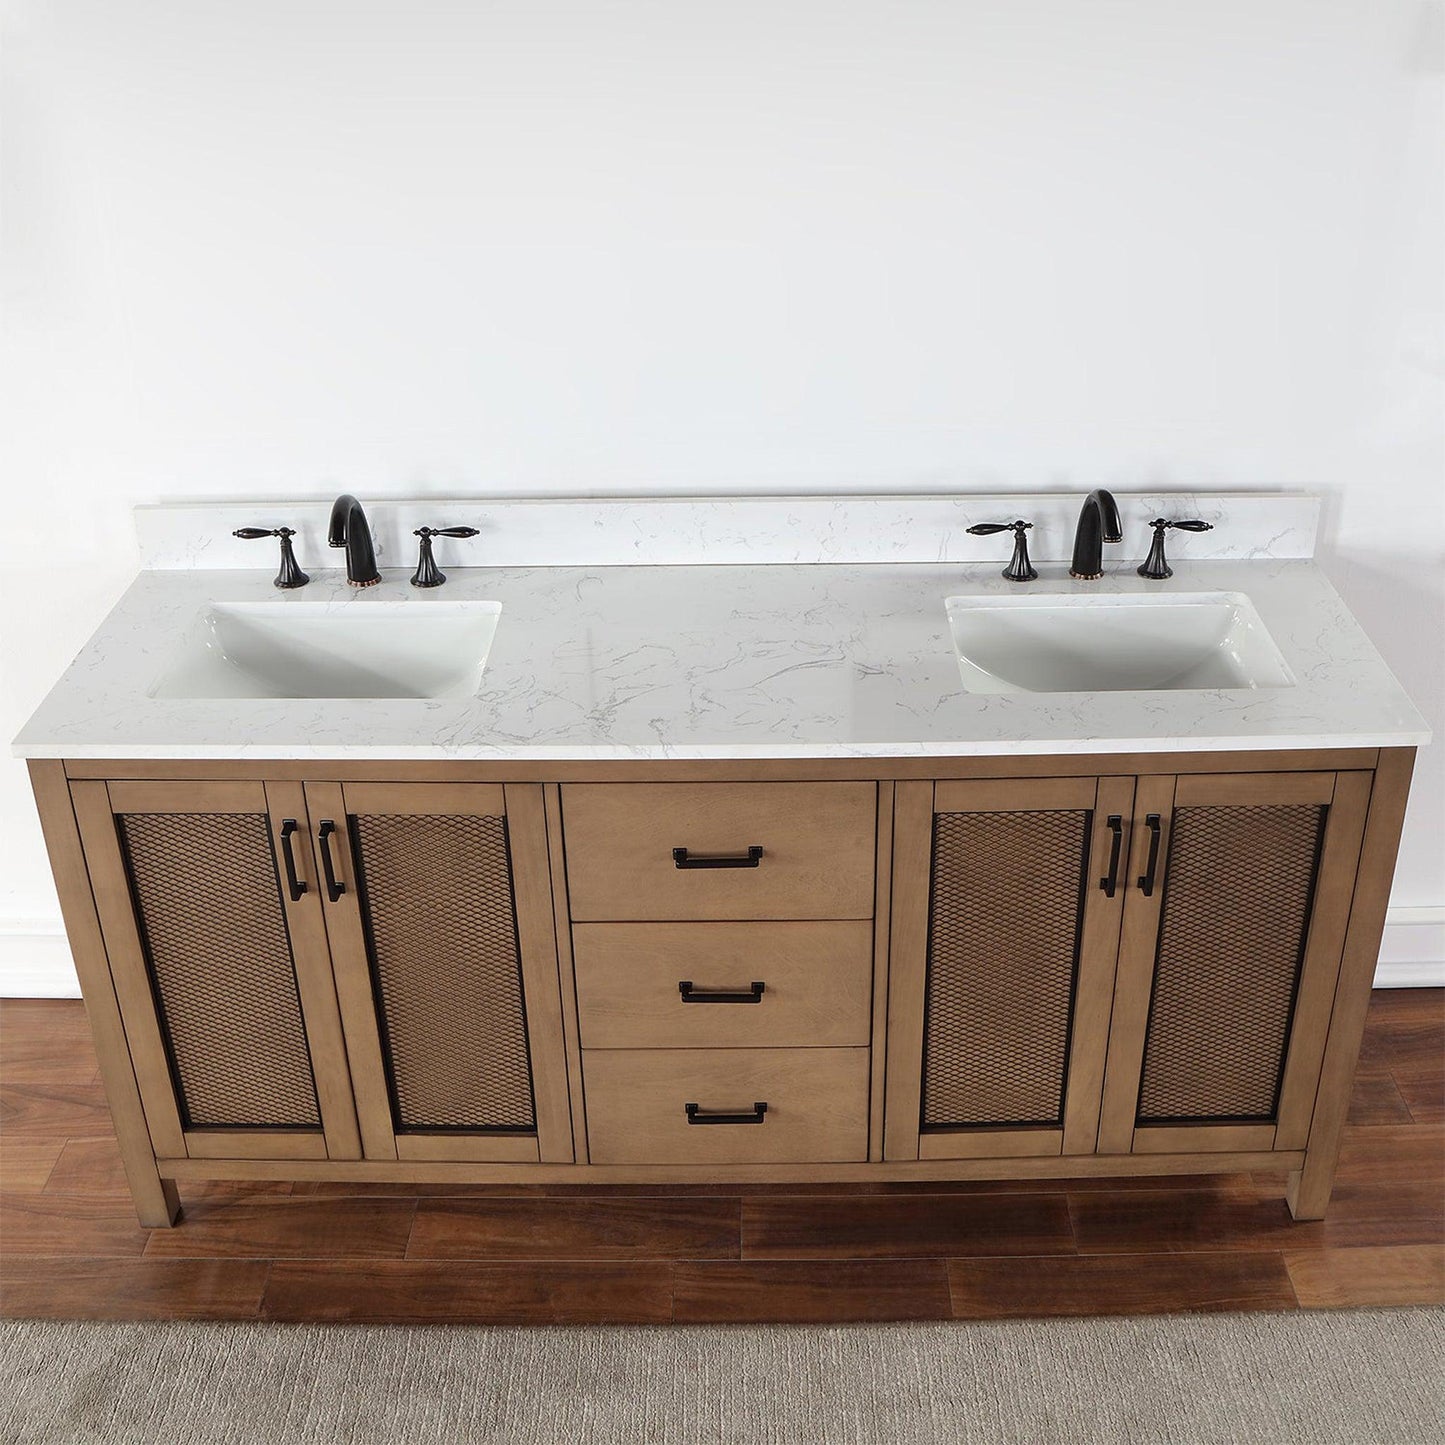 Altair Hadiya 72" Double Brown Pine Freestanding Bathroom Vanity Set With Elegant Aosta White Composite Stone Top, Two Rectangular Undermount Ceramic Sinks, Overflow, and Backsplash